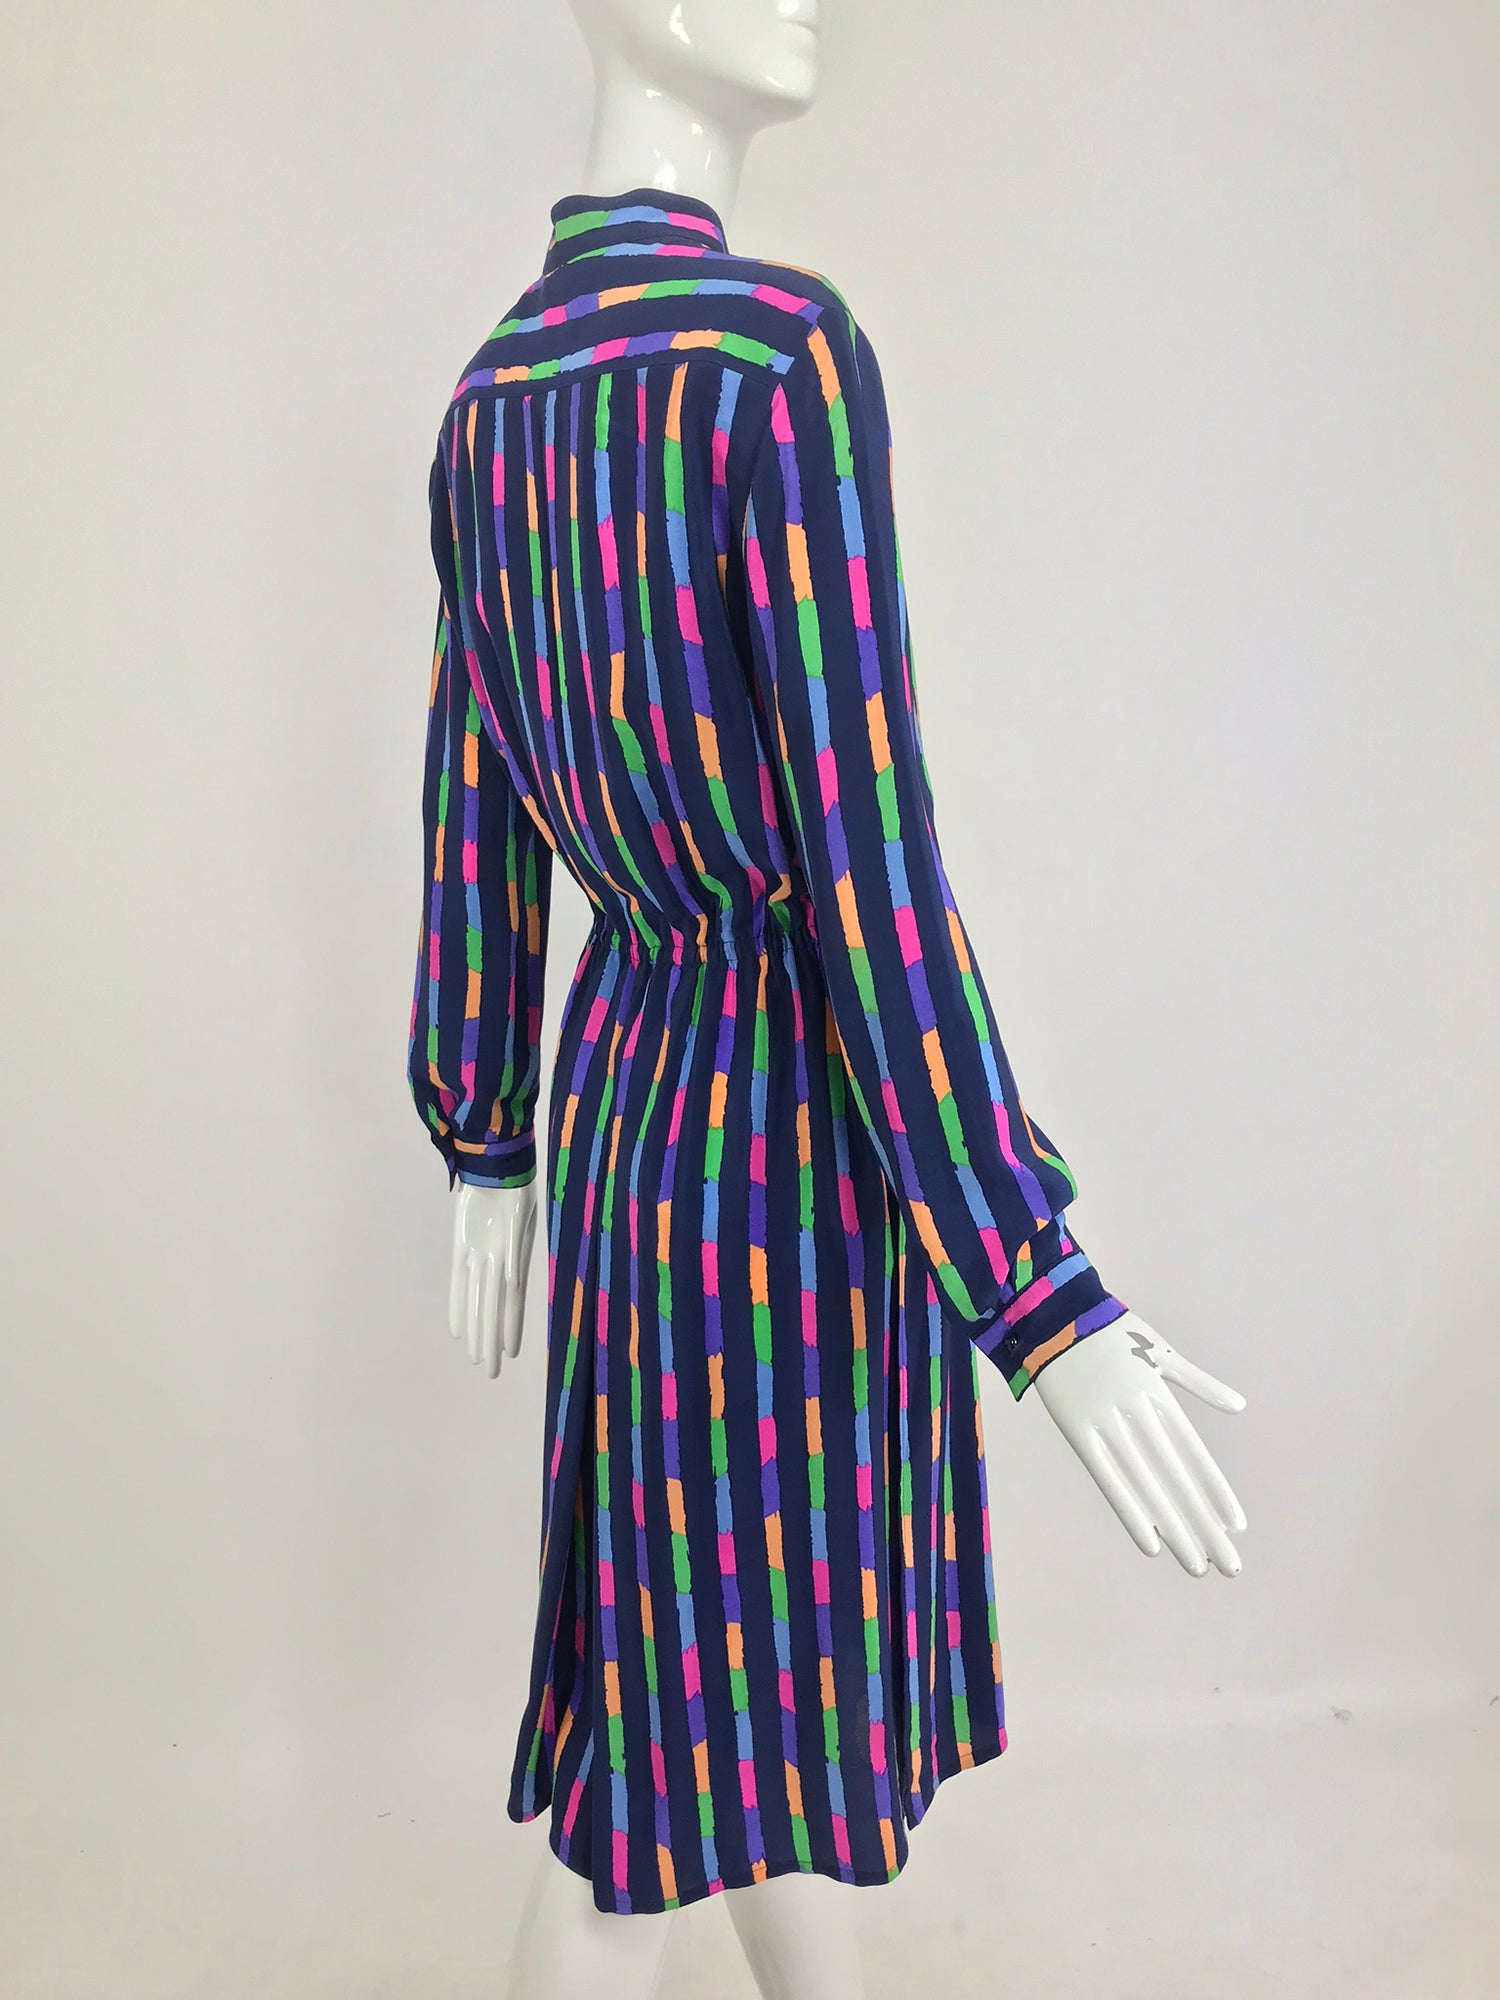 luvkitsch Stunning Louis Feraud Black Silk Velvet Gown Dress Couture 1980's Drop Waist Formal Full Length Germany US Size 10 Medium